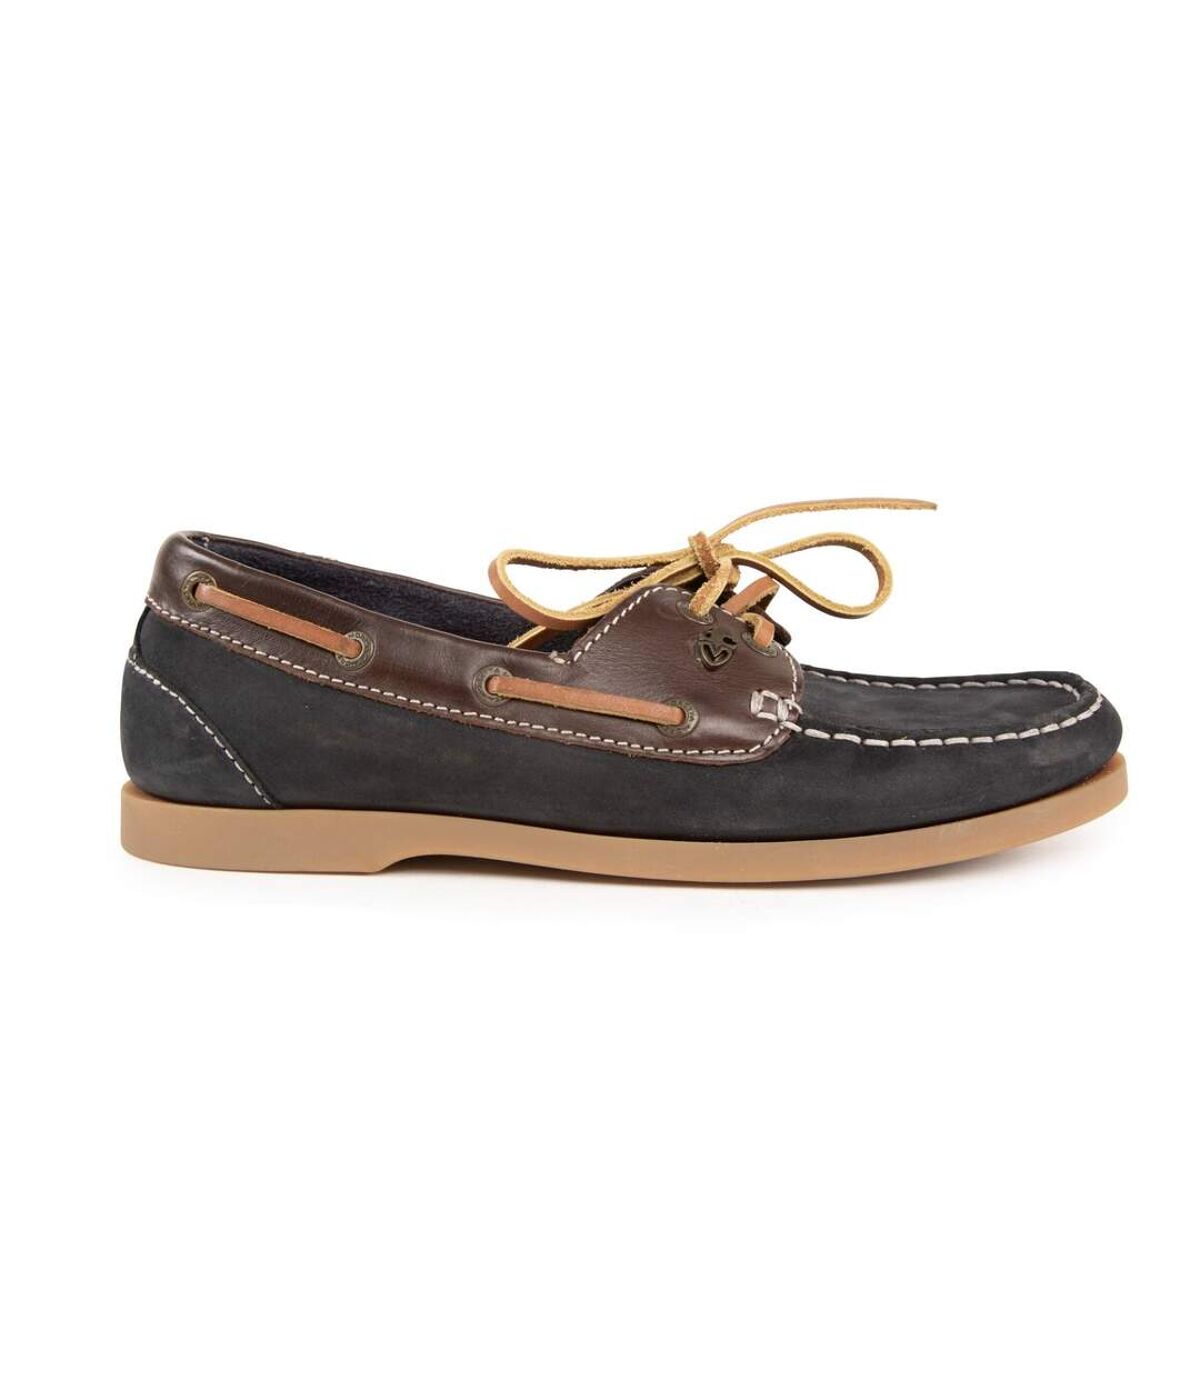 Moretta Womens/Ladies Avisa Leather Boat Shoes (Navy) - UTER390